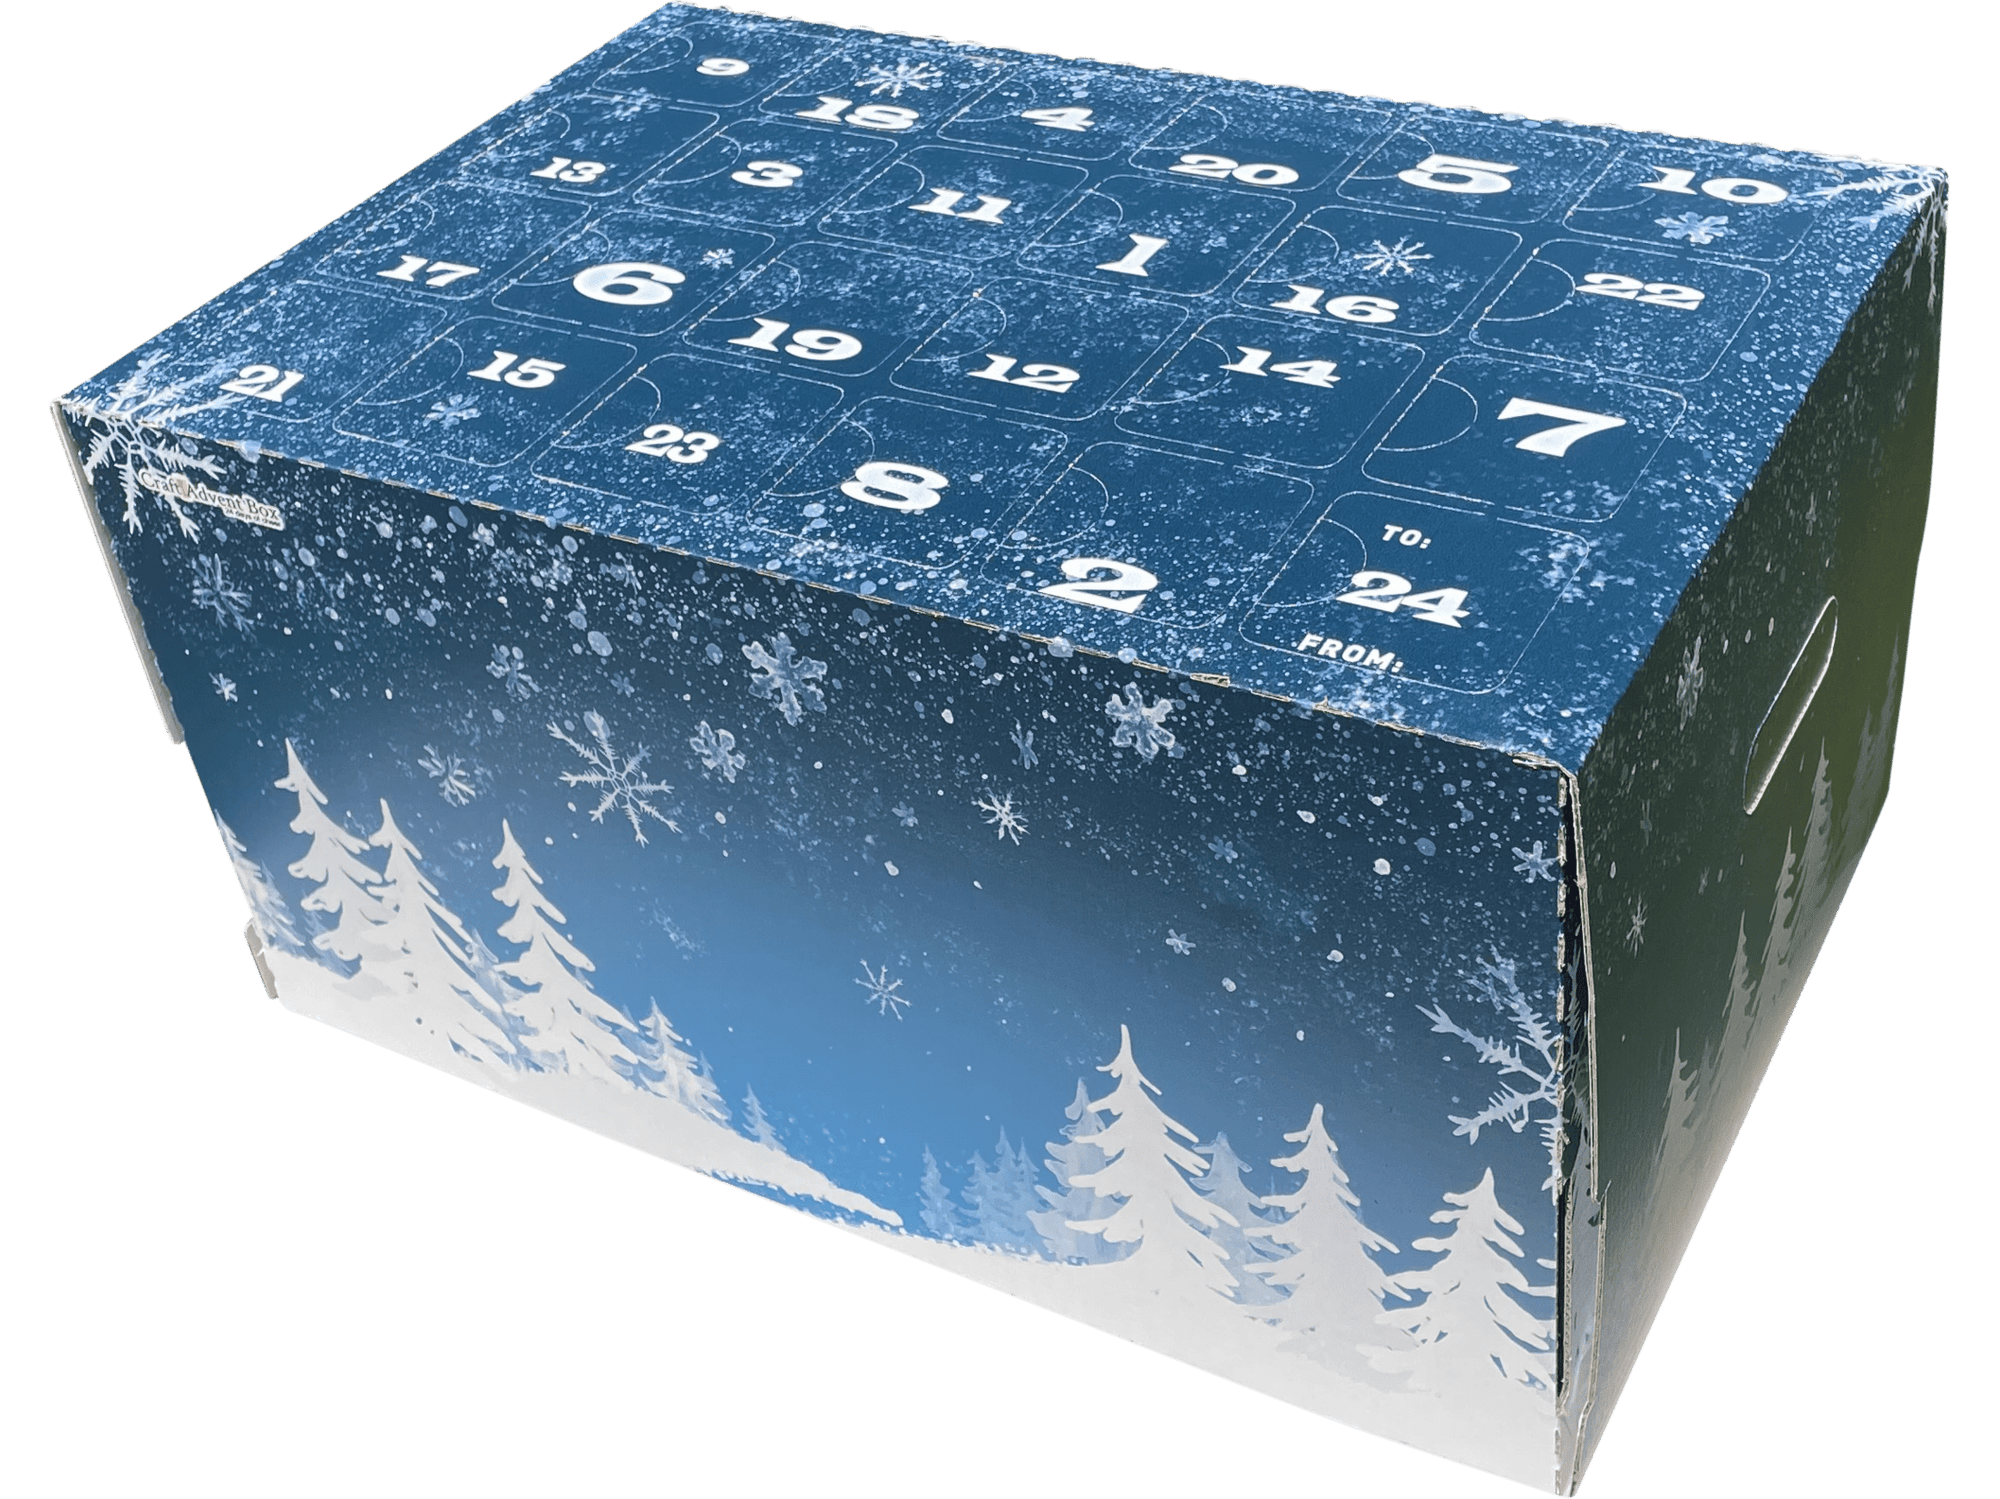 Advent Calendar Box, Resin Craft Box, Resin Craft Kit, UV Resin Kit, Craft Box